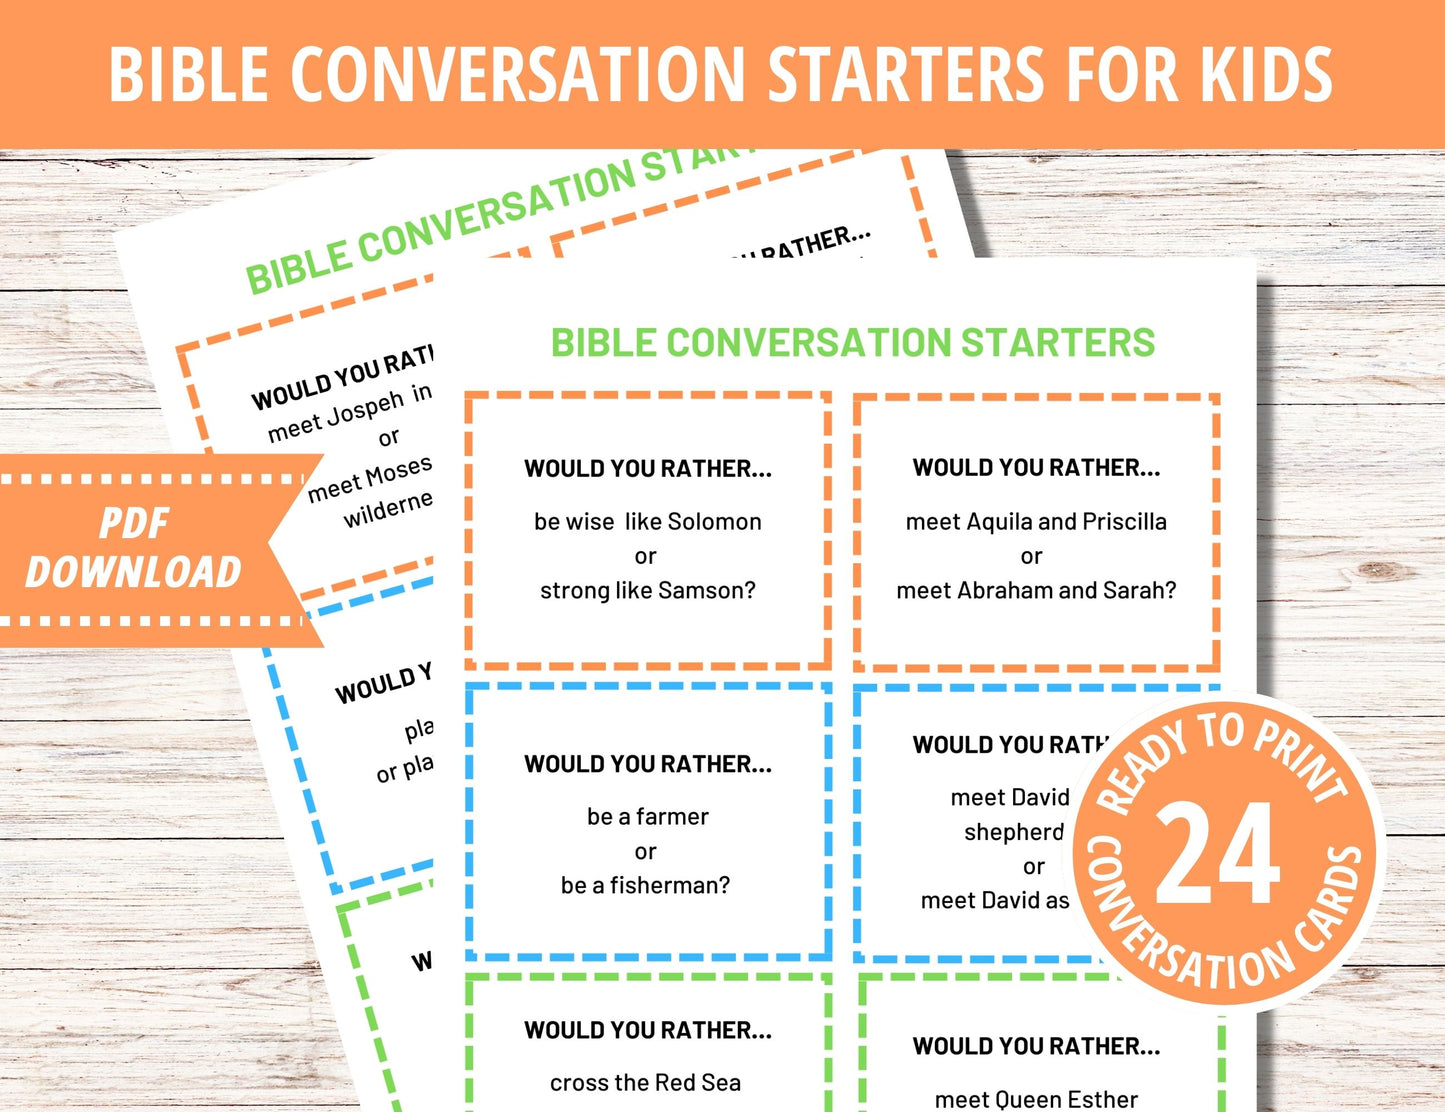 Bible Conversation Starters for Kids